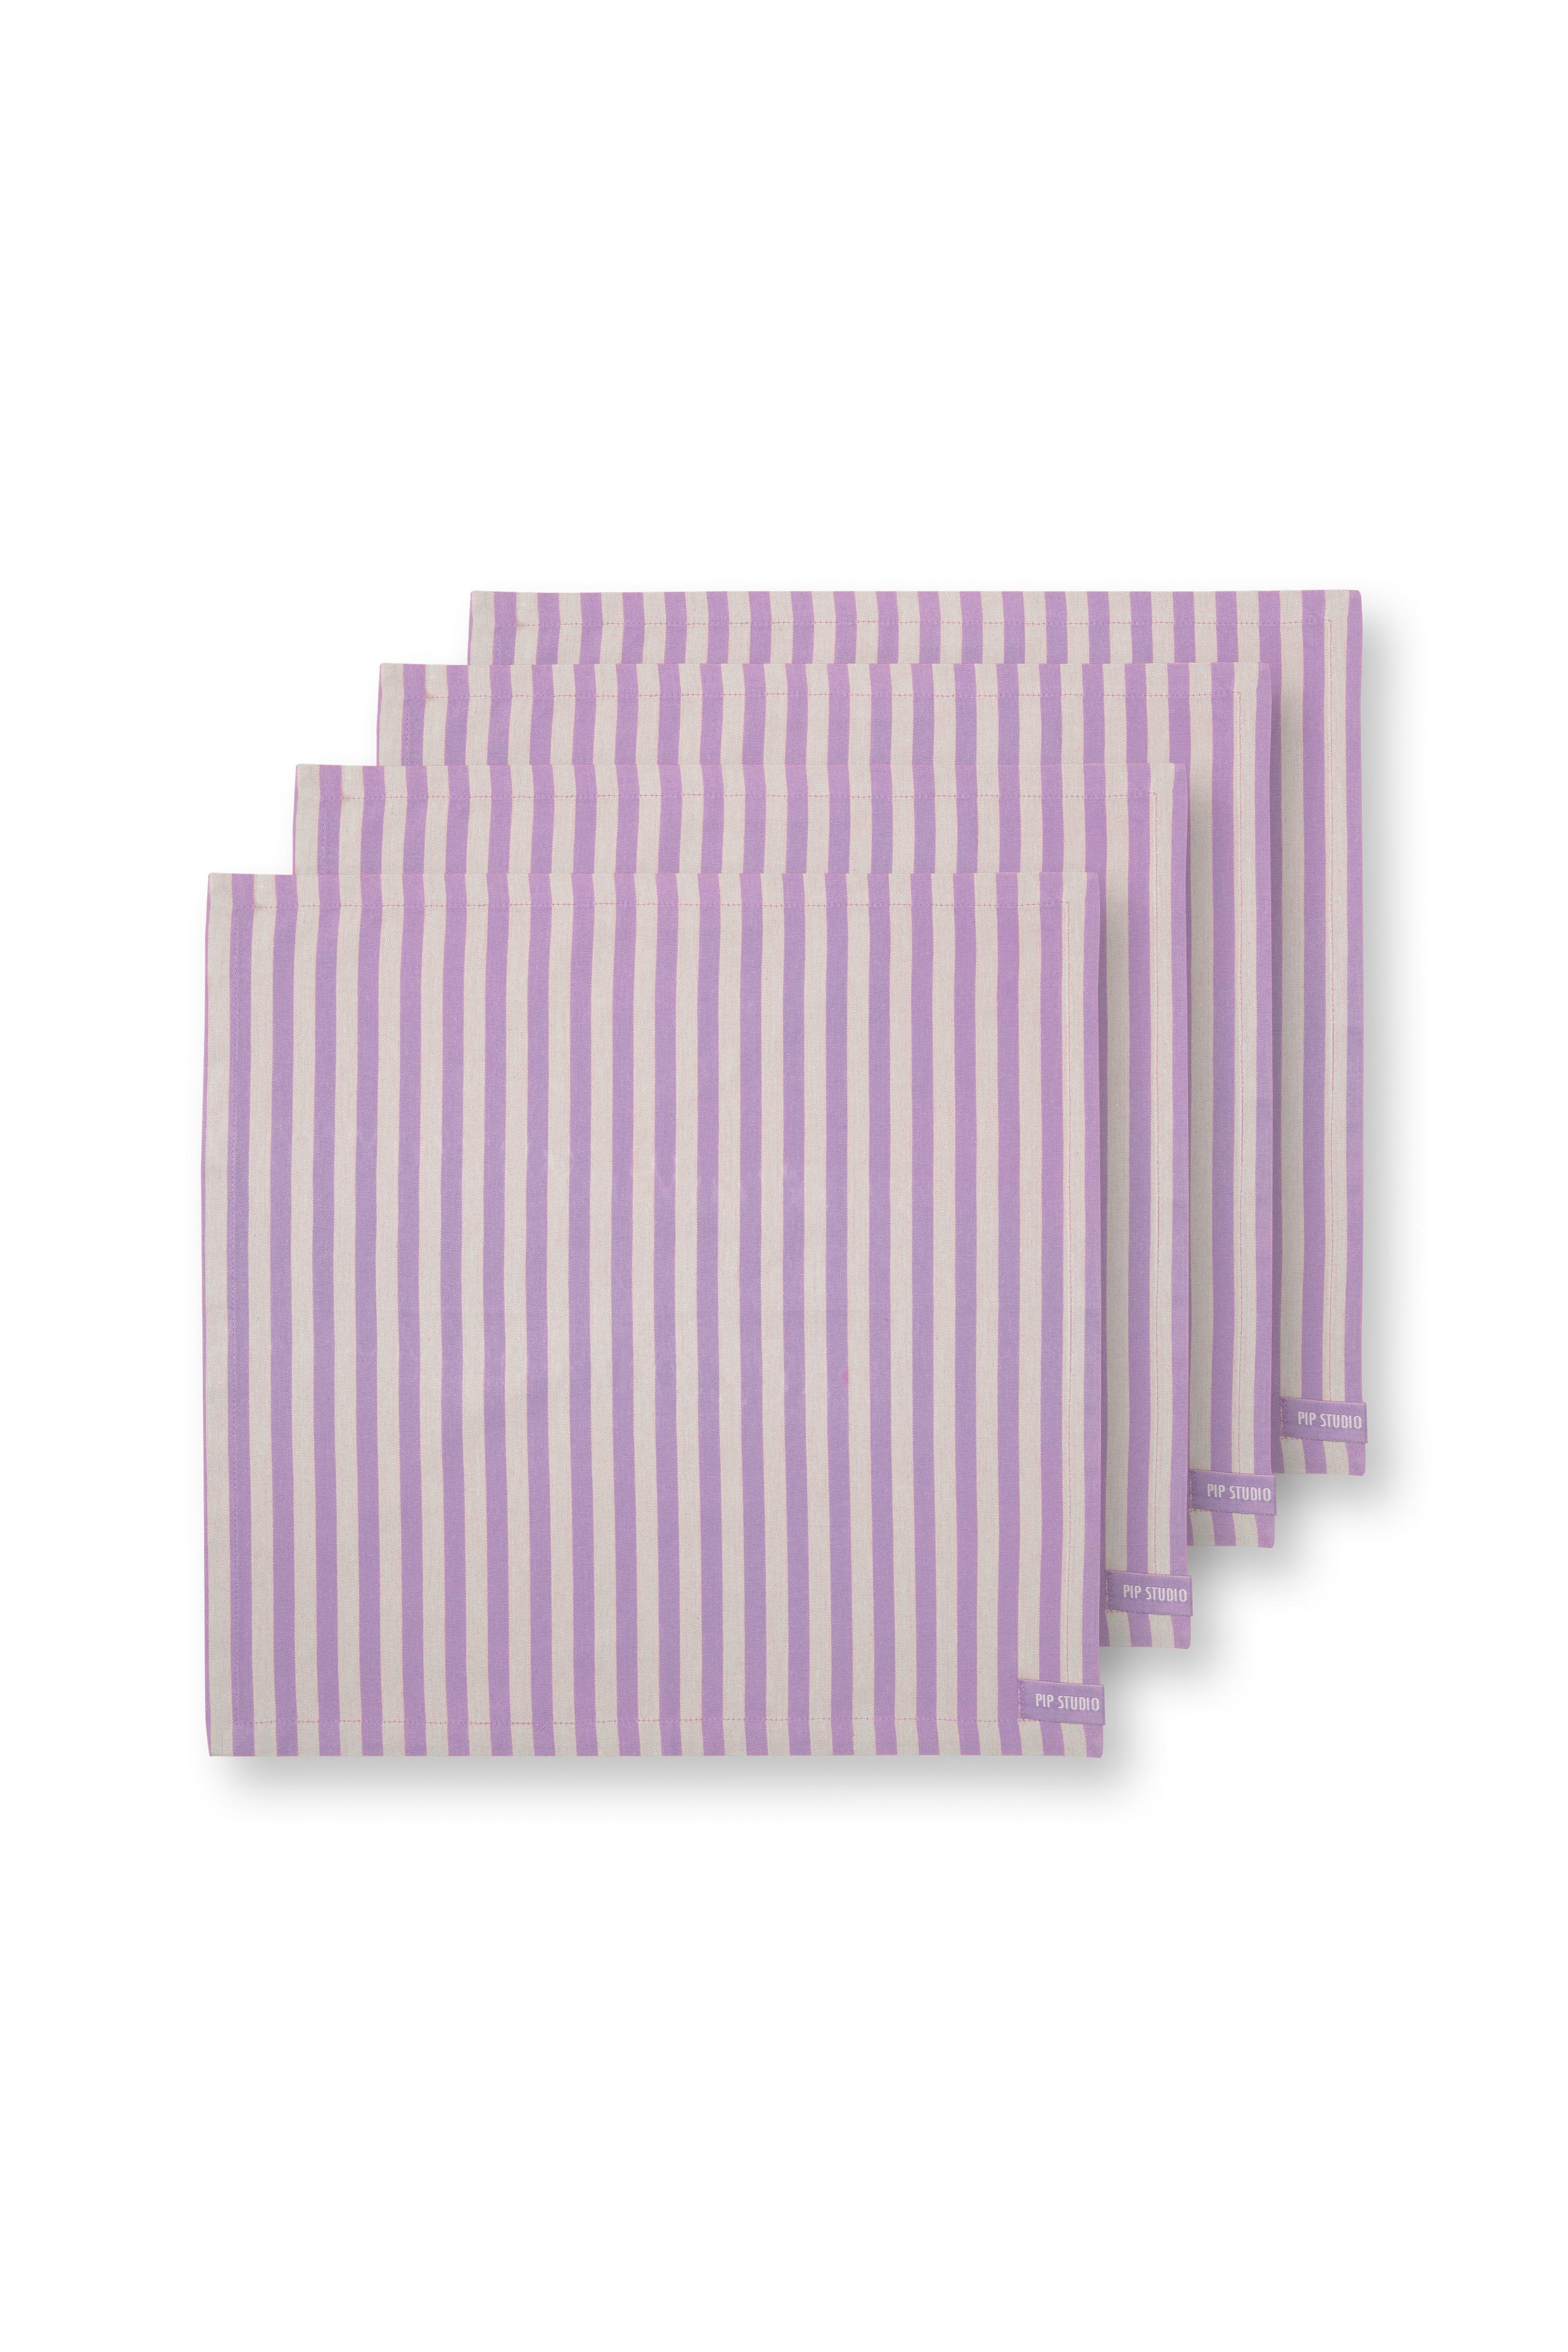 Set/4 Napkins Stripes Lilac 40x40cm Gift